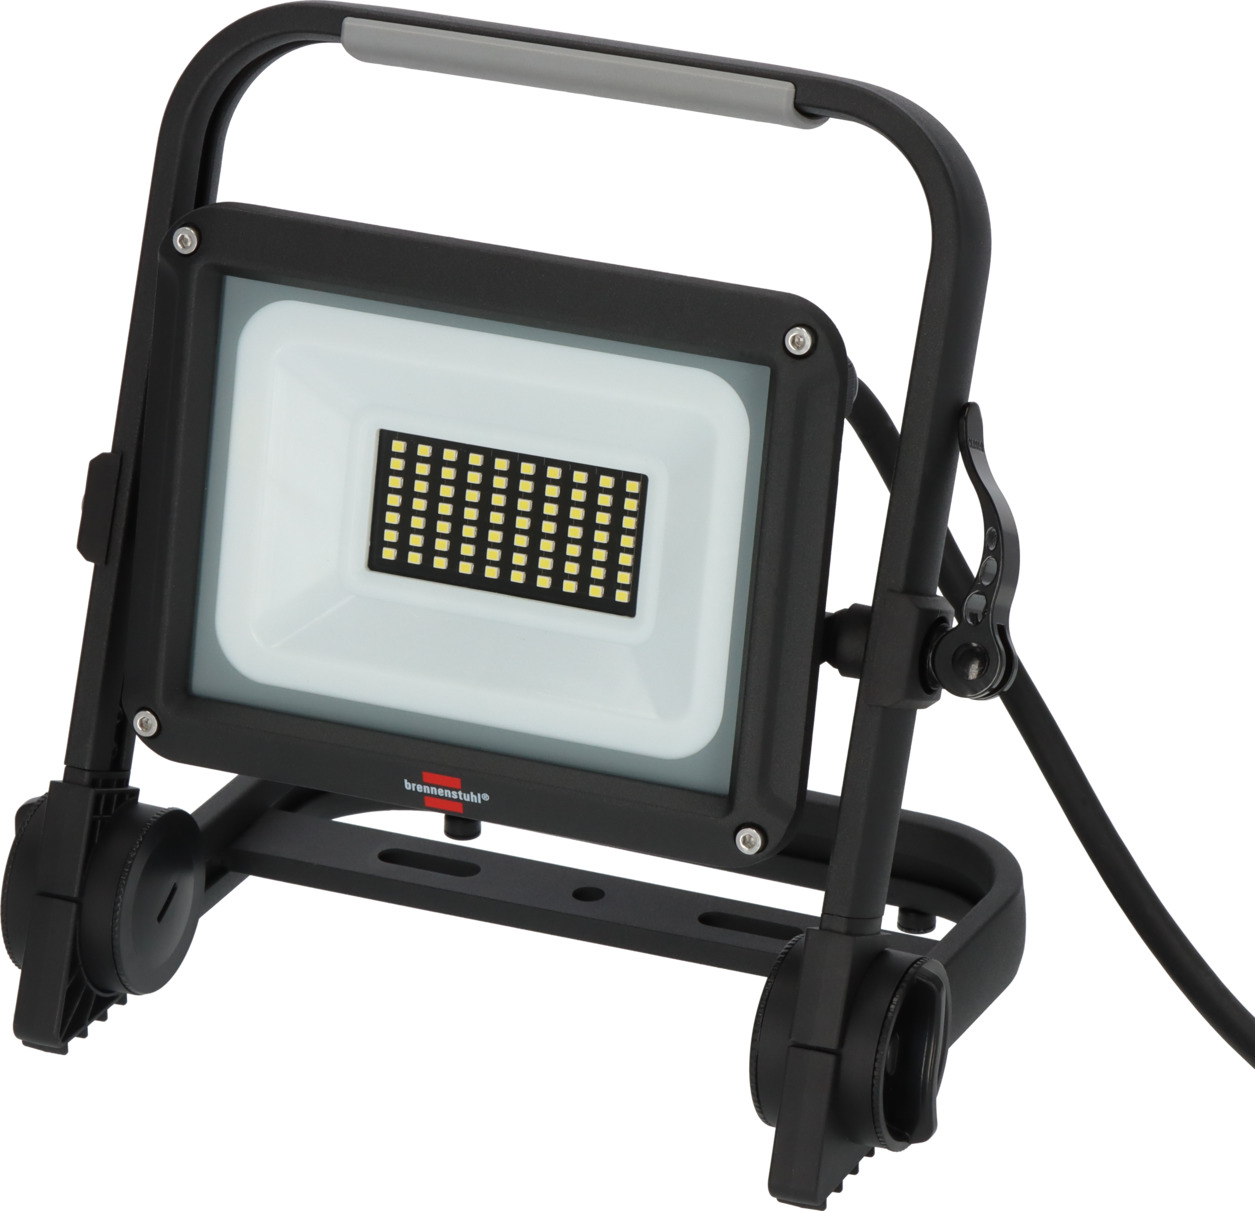 LED Work Light JARO H07RN-F 3m 4060 3G1.0, brennenstuhl® | M, 30W, IP65 3450lm